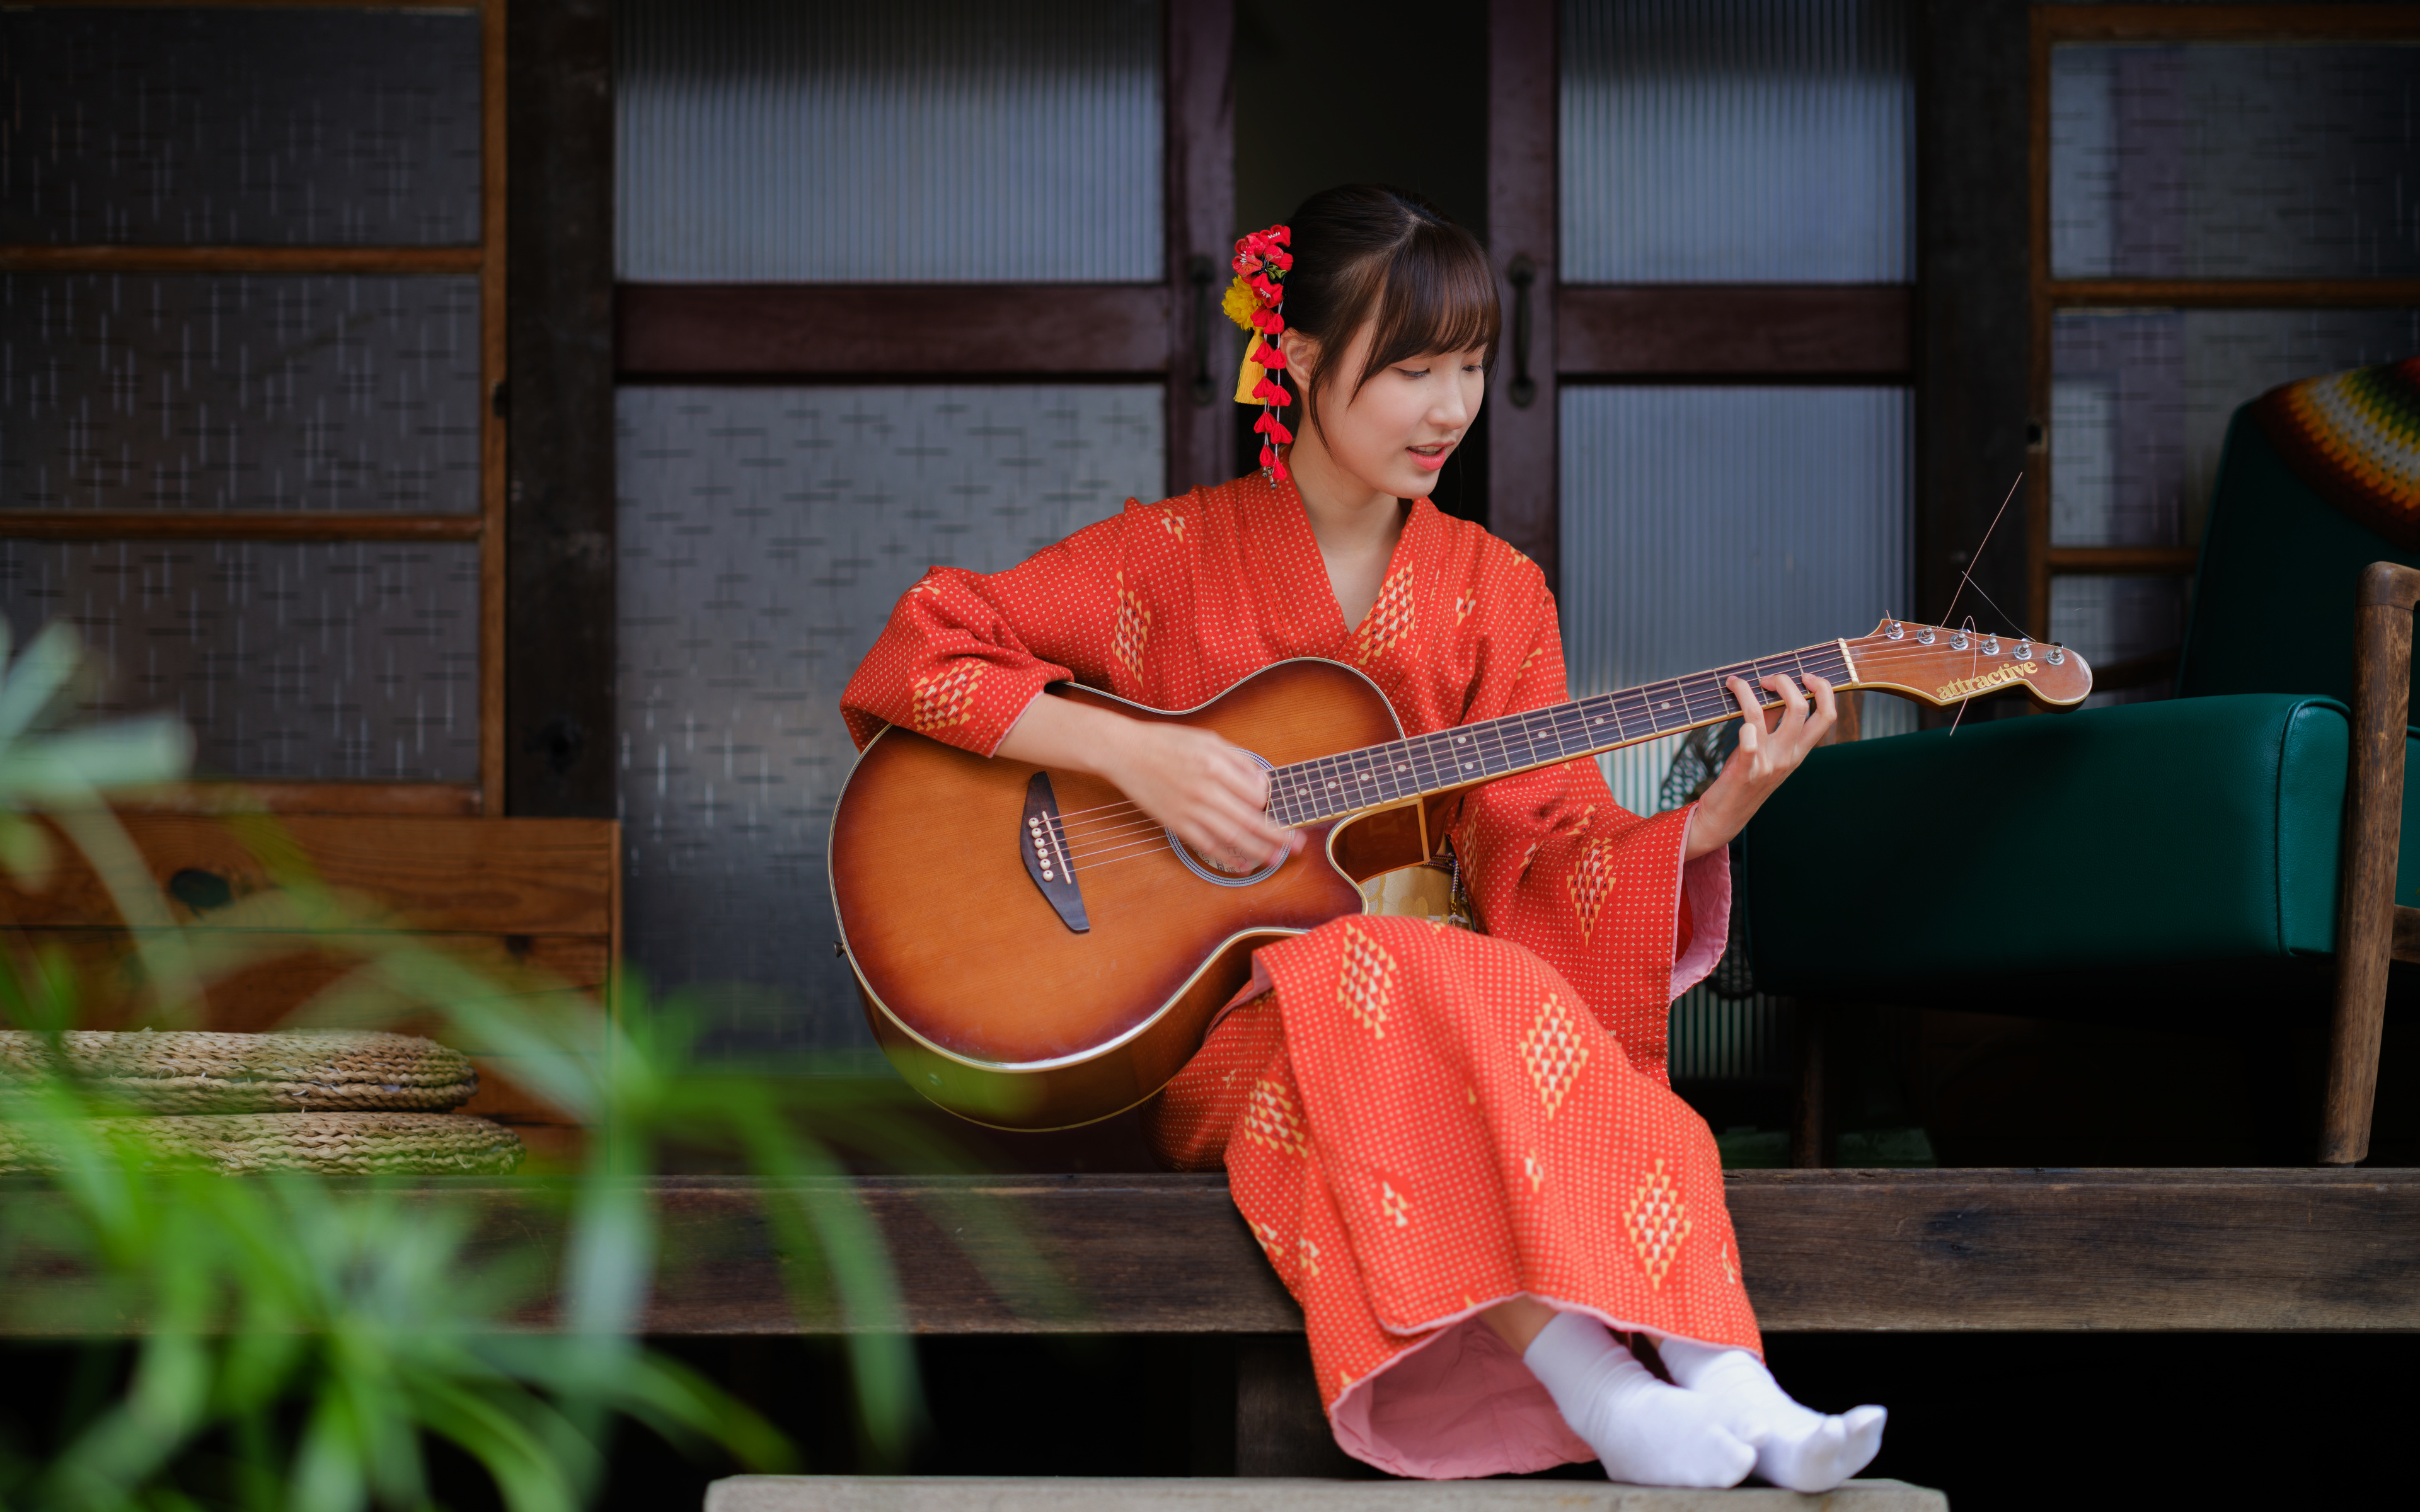 Asian Model Women Long Hair Dark Hair Kimono Traditional Clothing Hair Ornament Sitting Guitar Porch 3840x2400